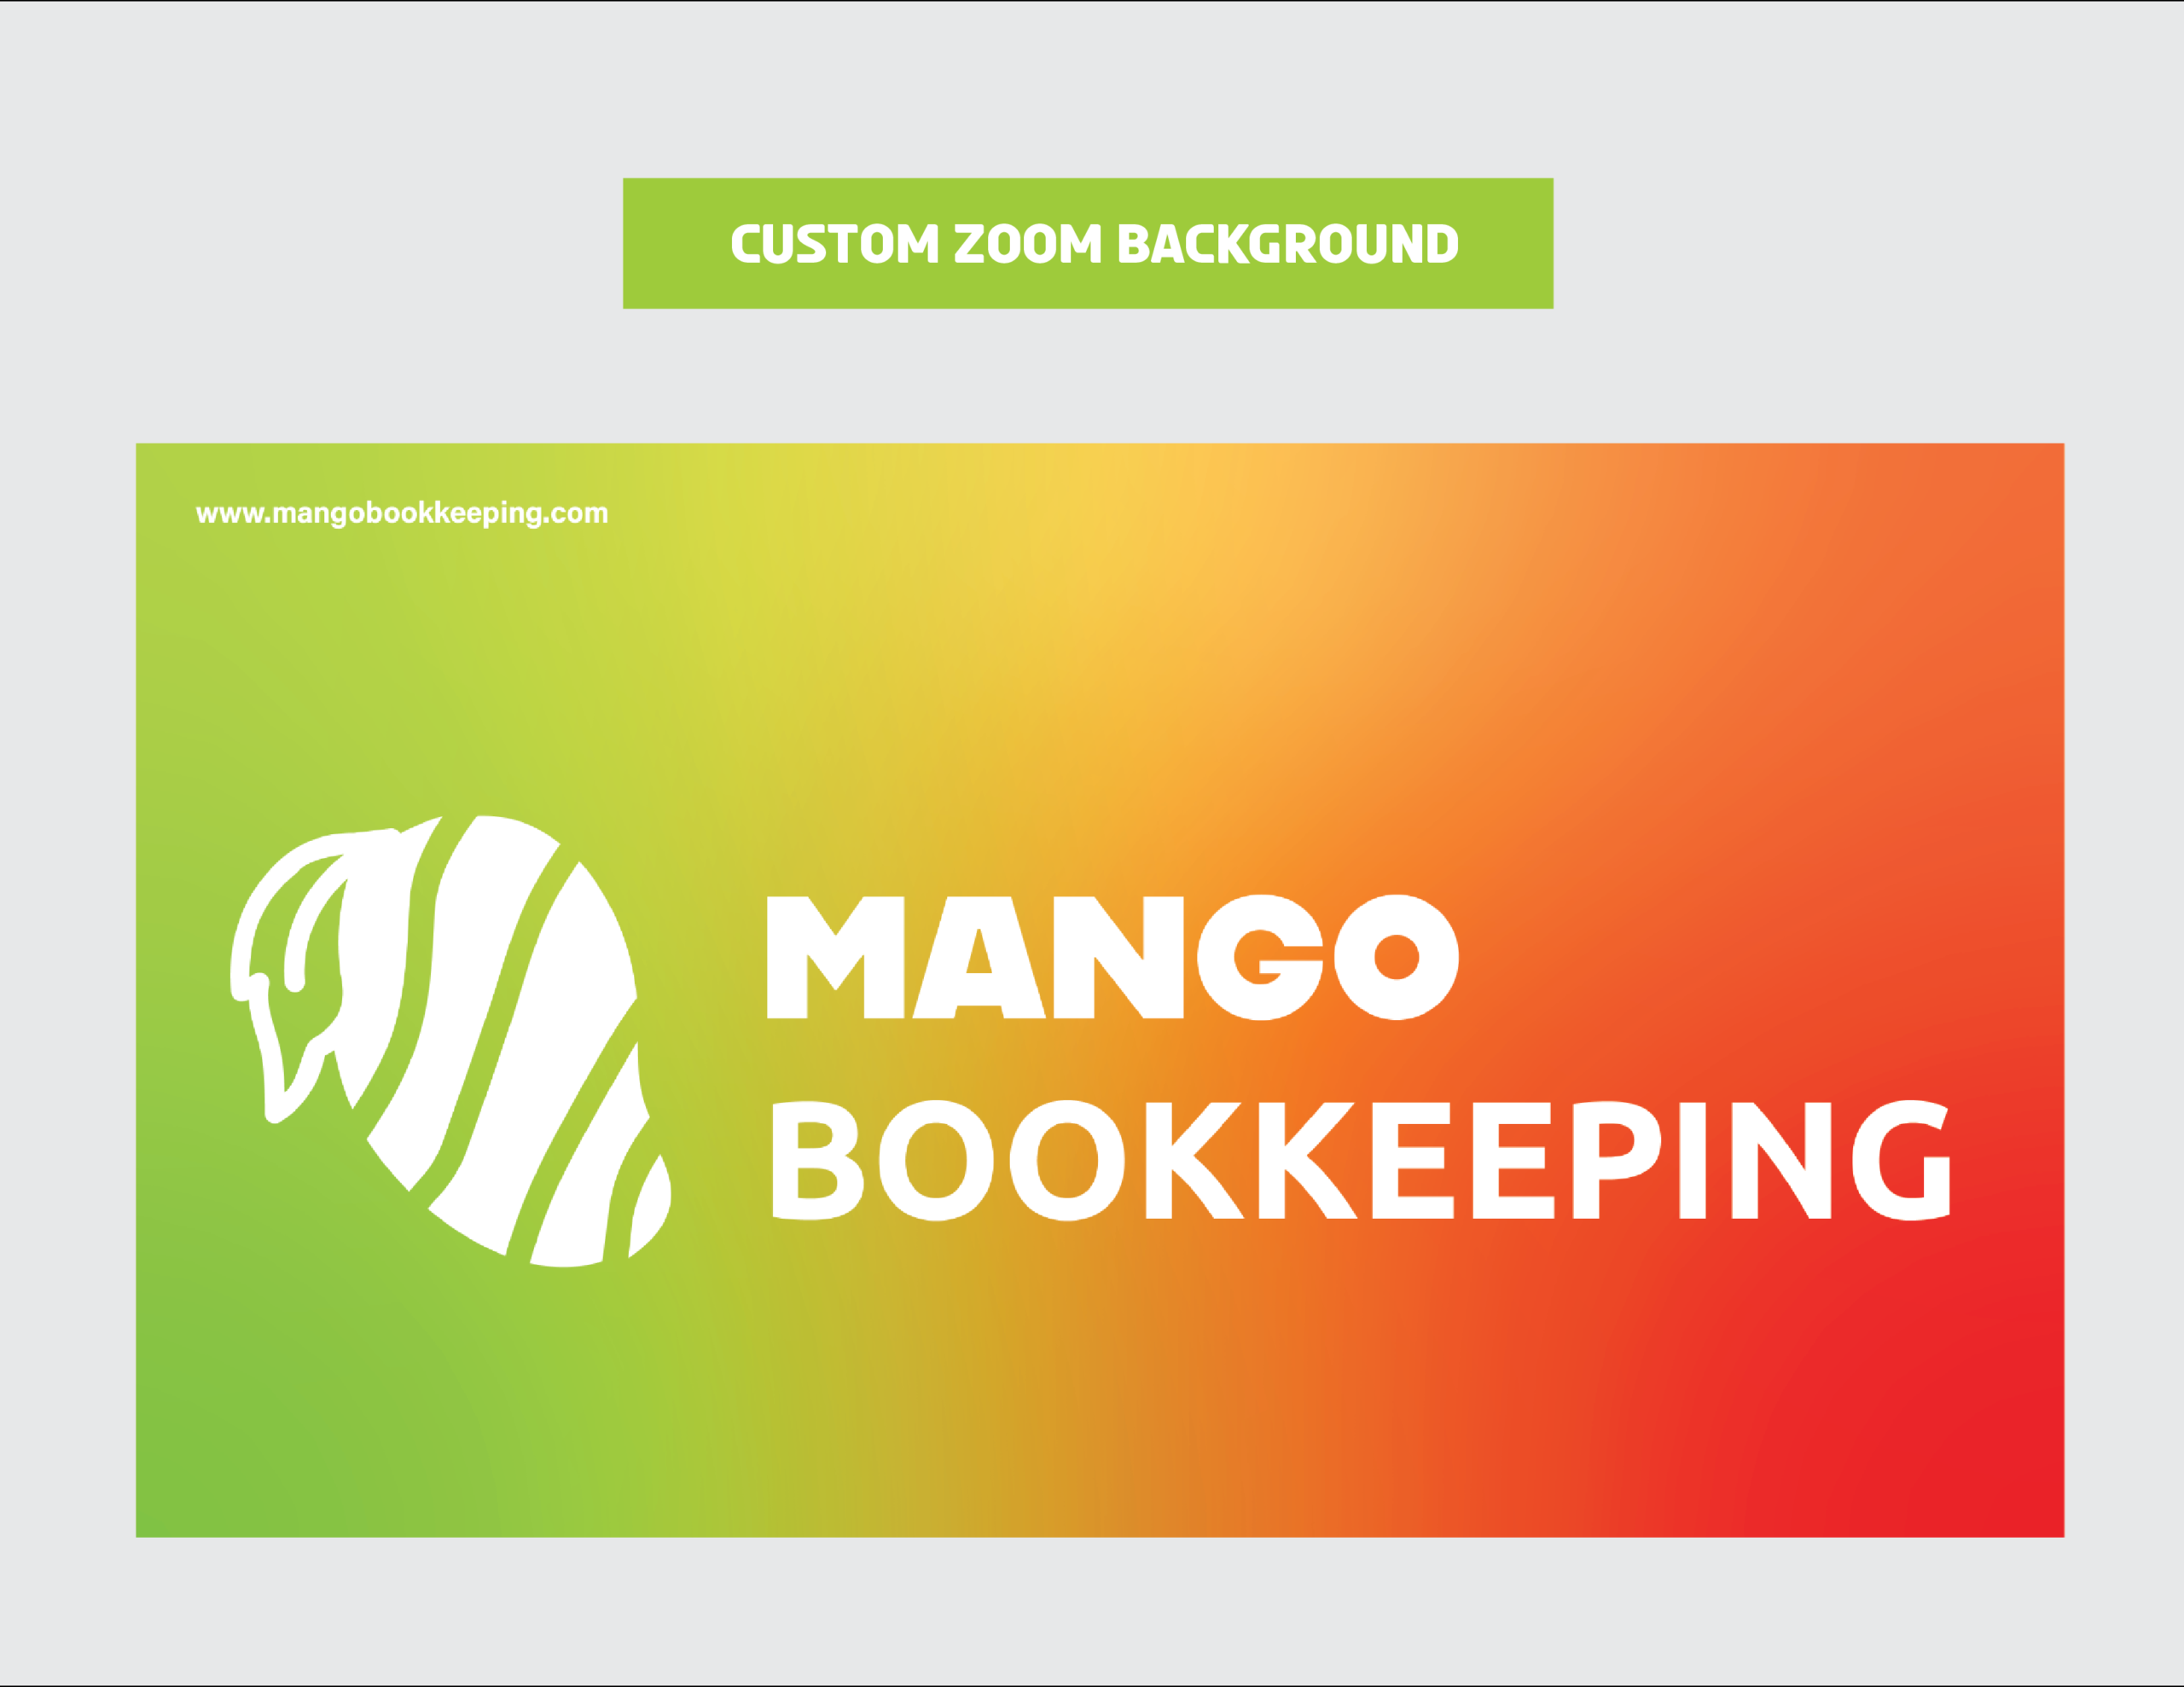 07_MangoBookkeeping_Custom Zoom Background